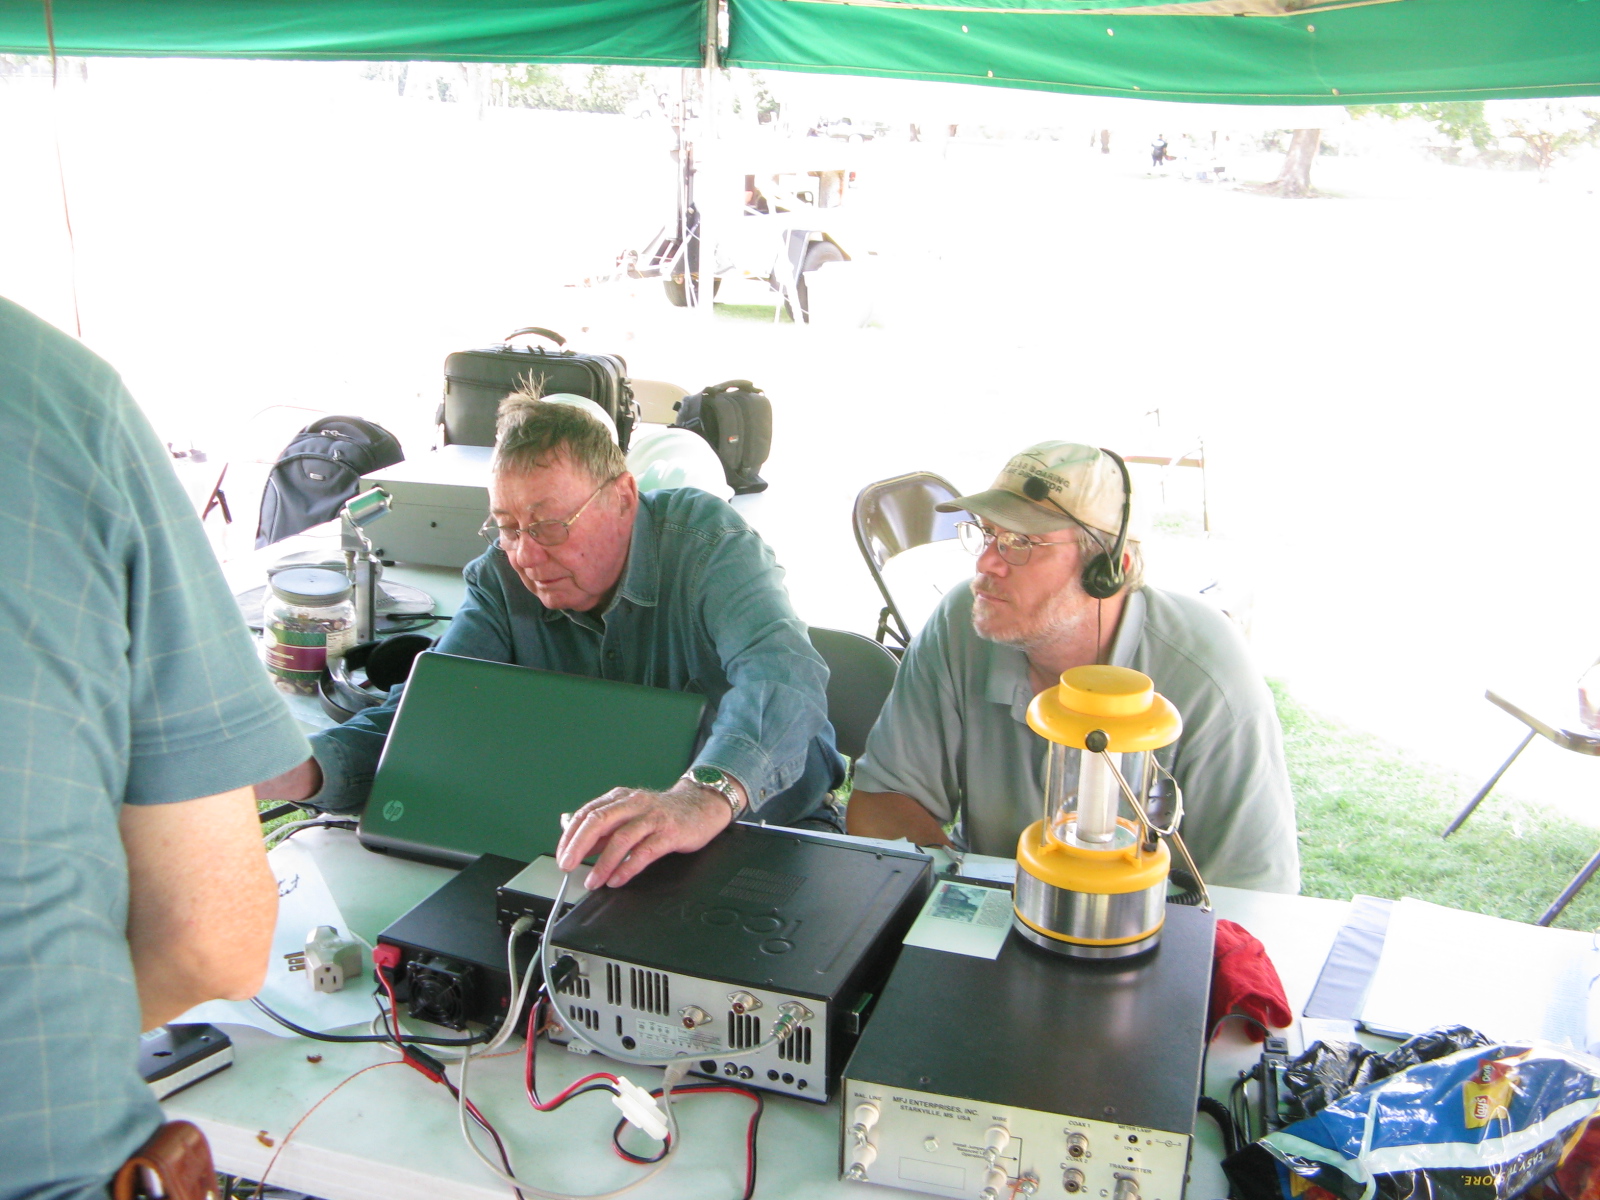 Garland and Willis operating the HF radio